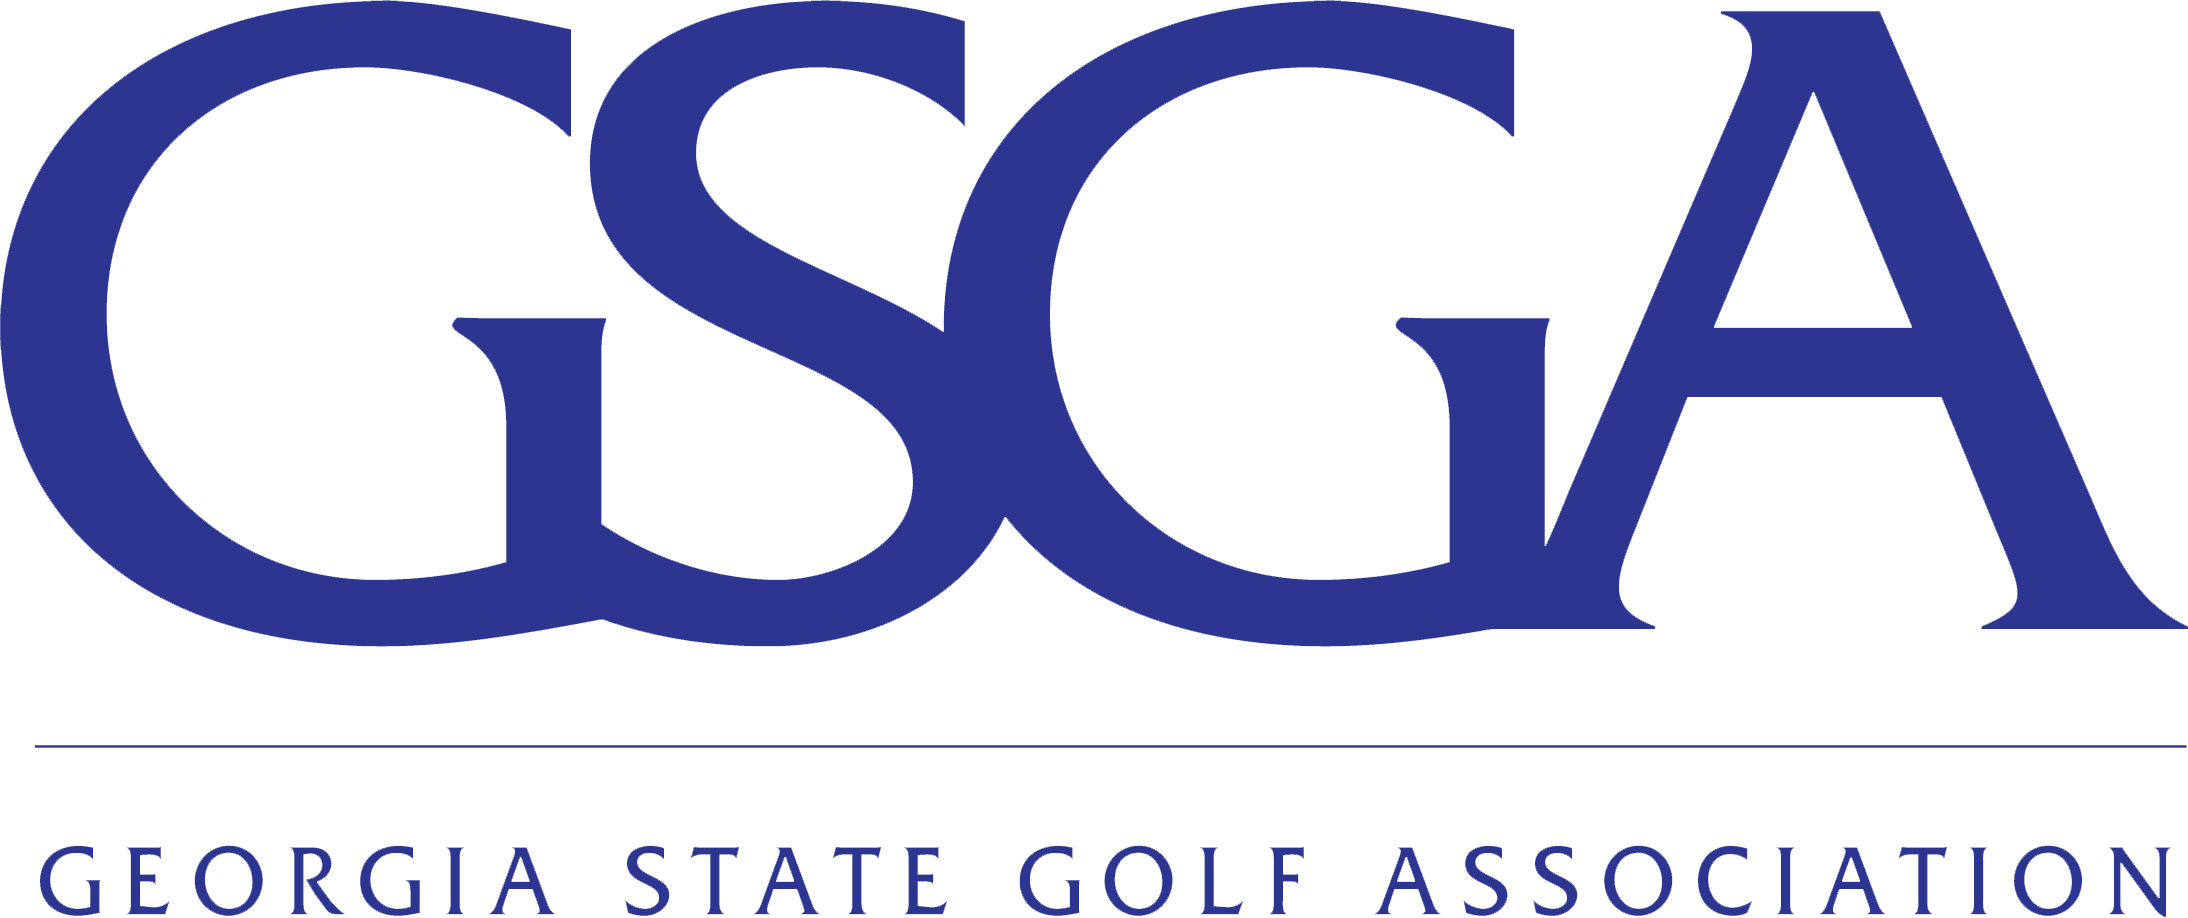 Georgia State Golf Association Hole In One Insurance Program